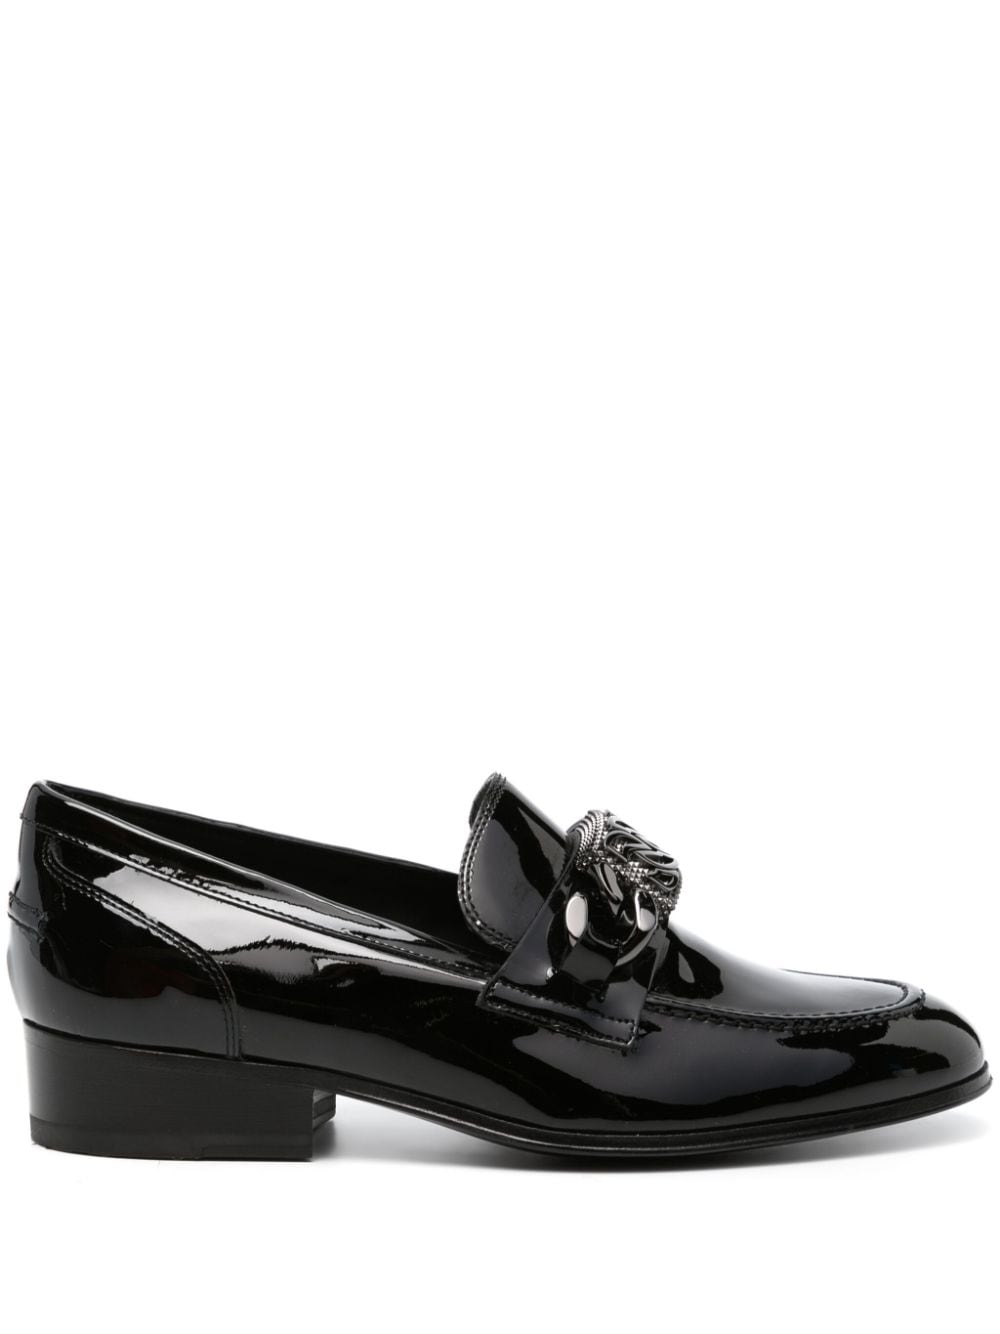 Casadei buckle-embellished patent leather loafers - Black von Casadei